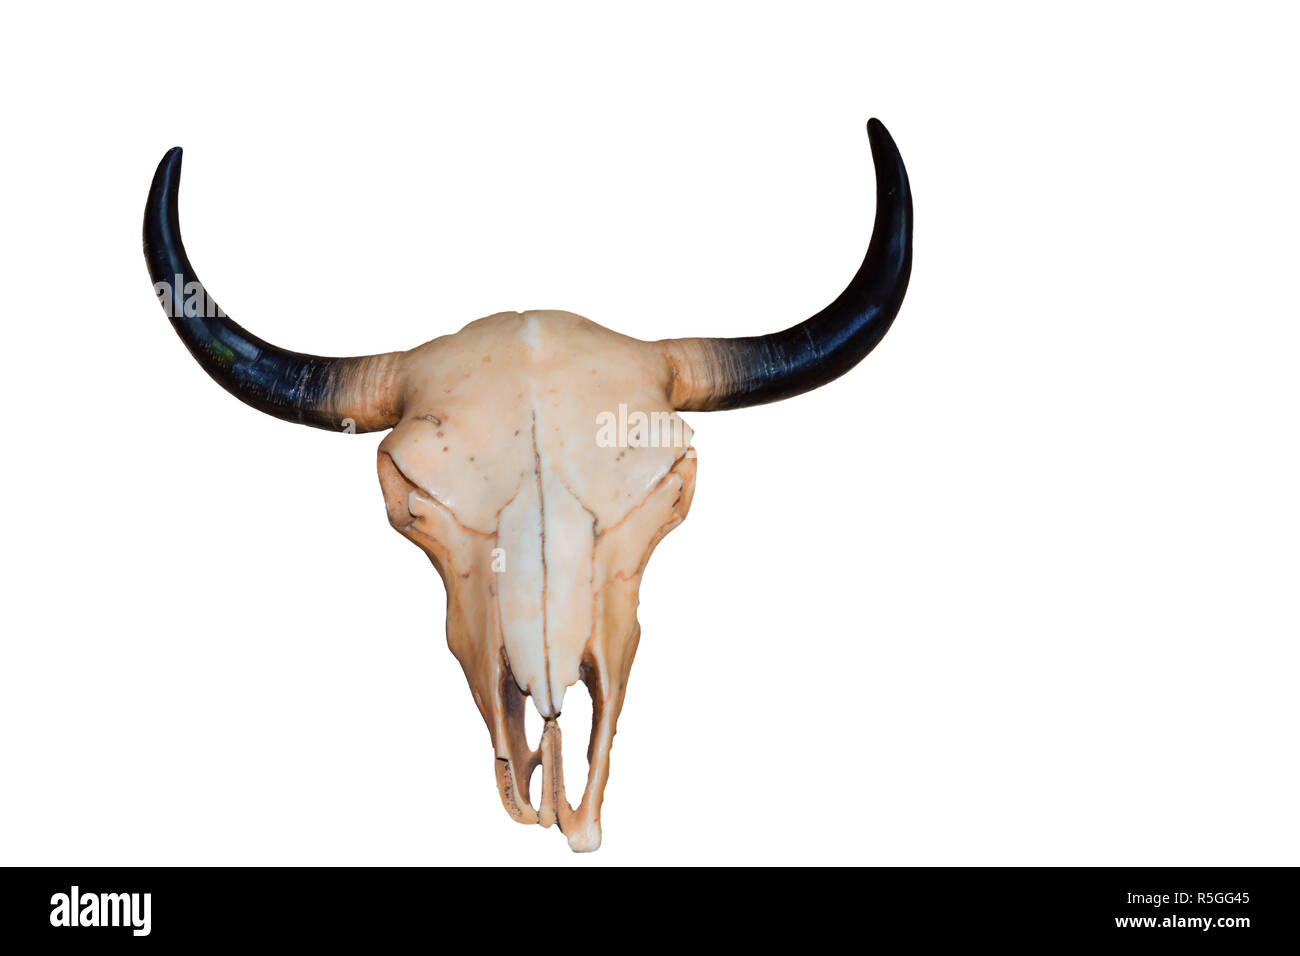 cow skull on white background Stock Photo